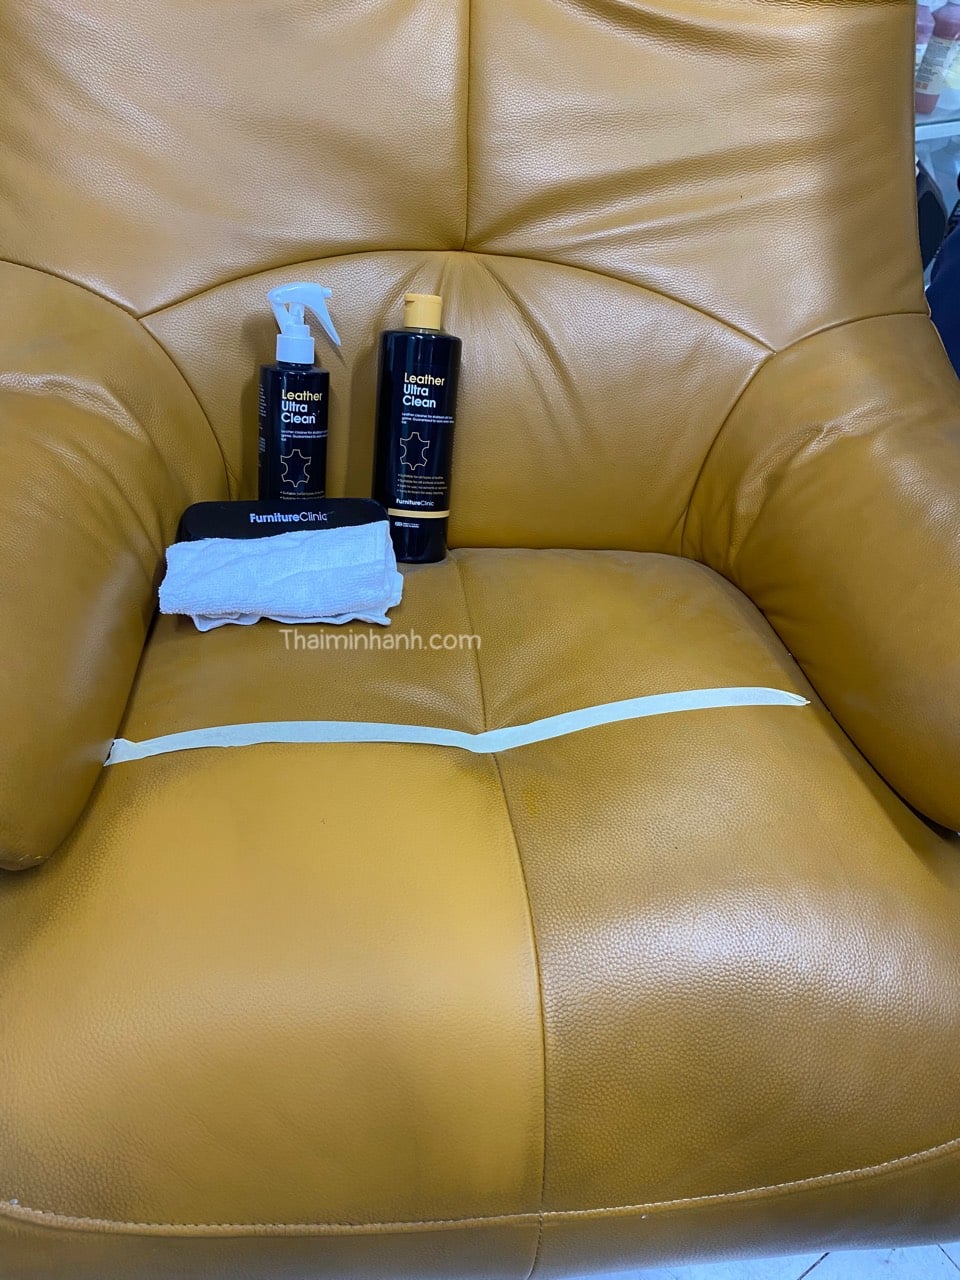 Leather Colorant - Furniture Clinic